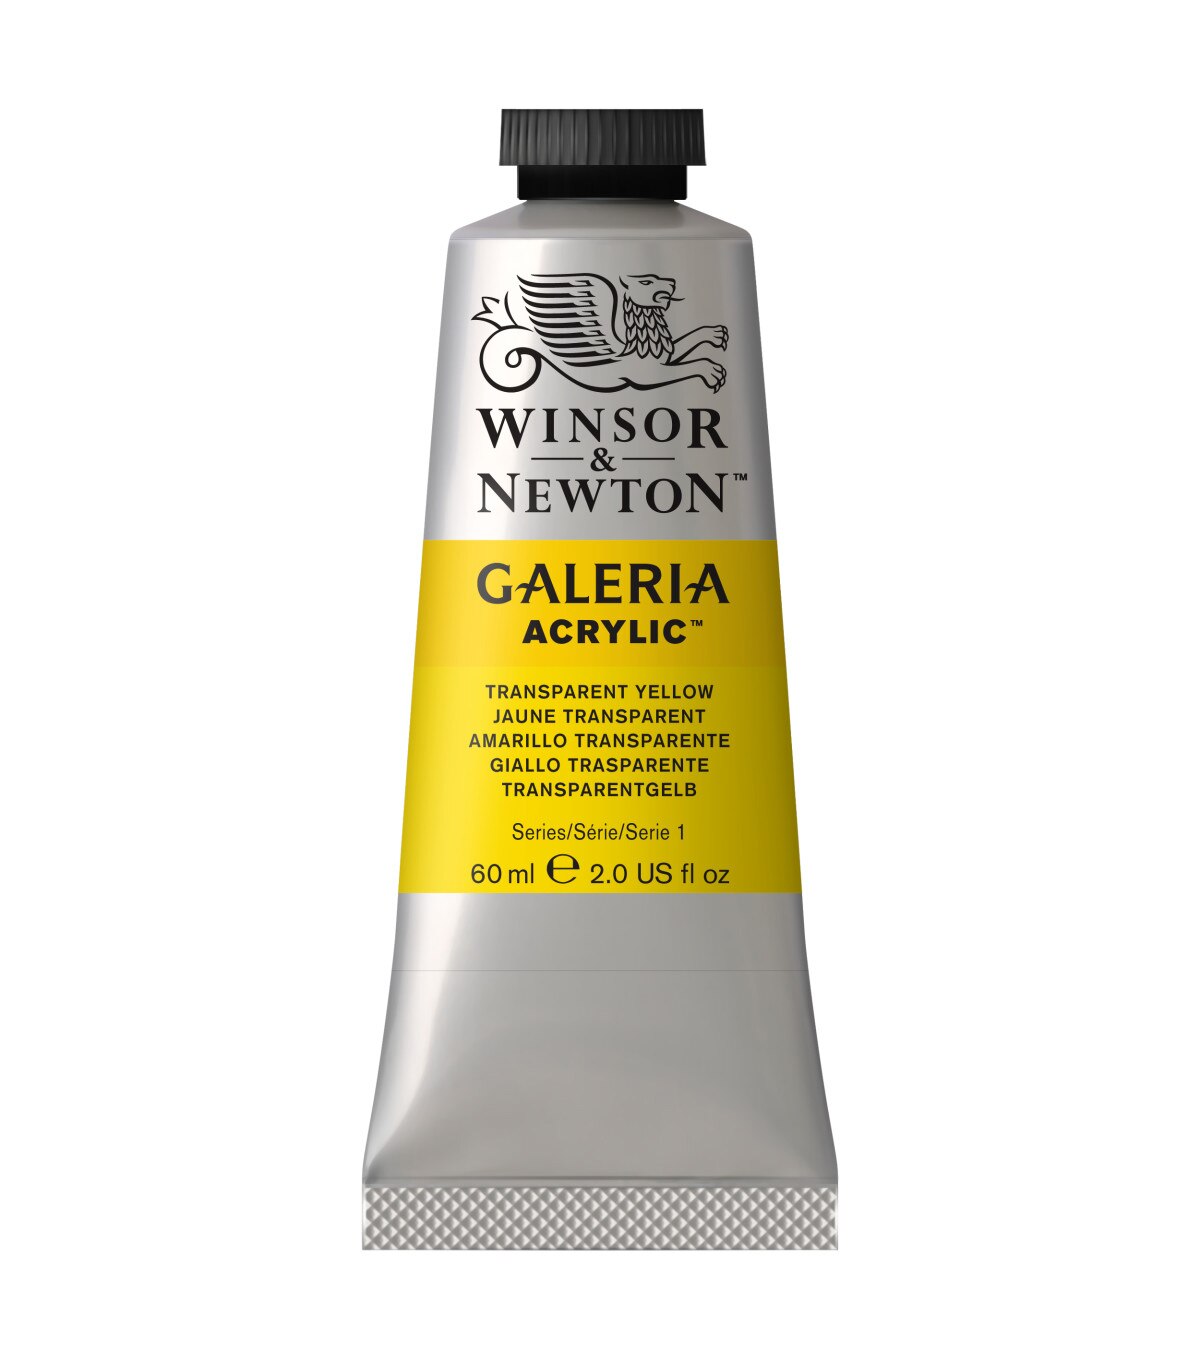 Winsor & Newton Galeria Acrylic Paint 60ml Transparent Yellow JOANN